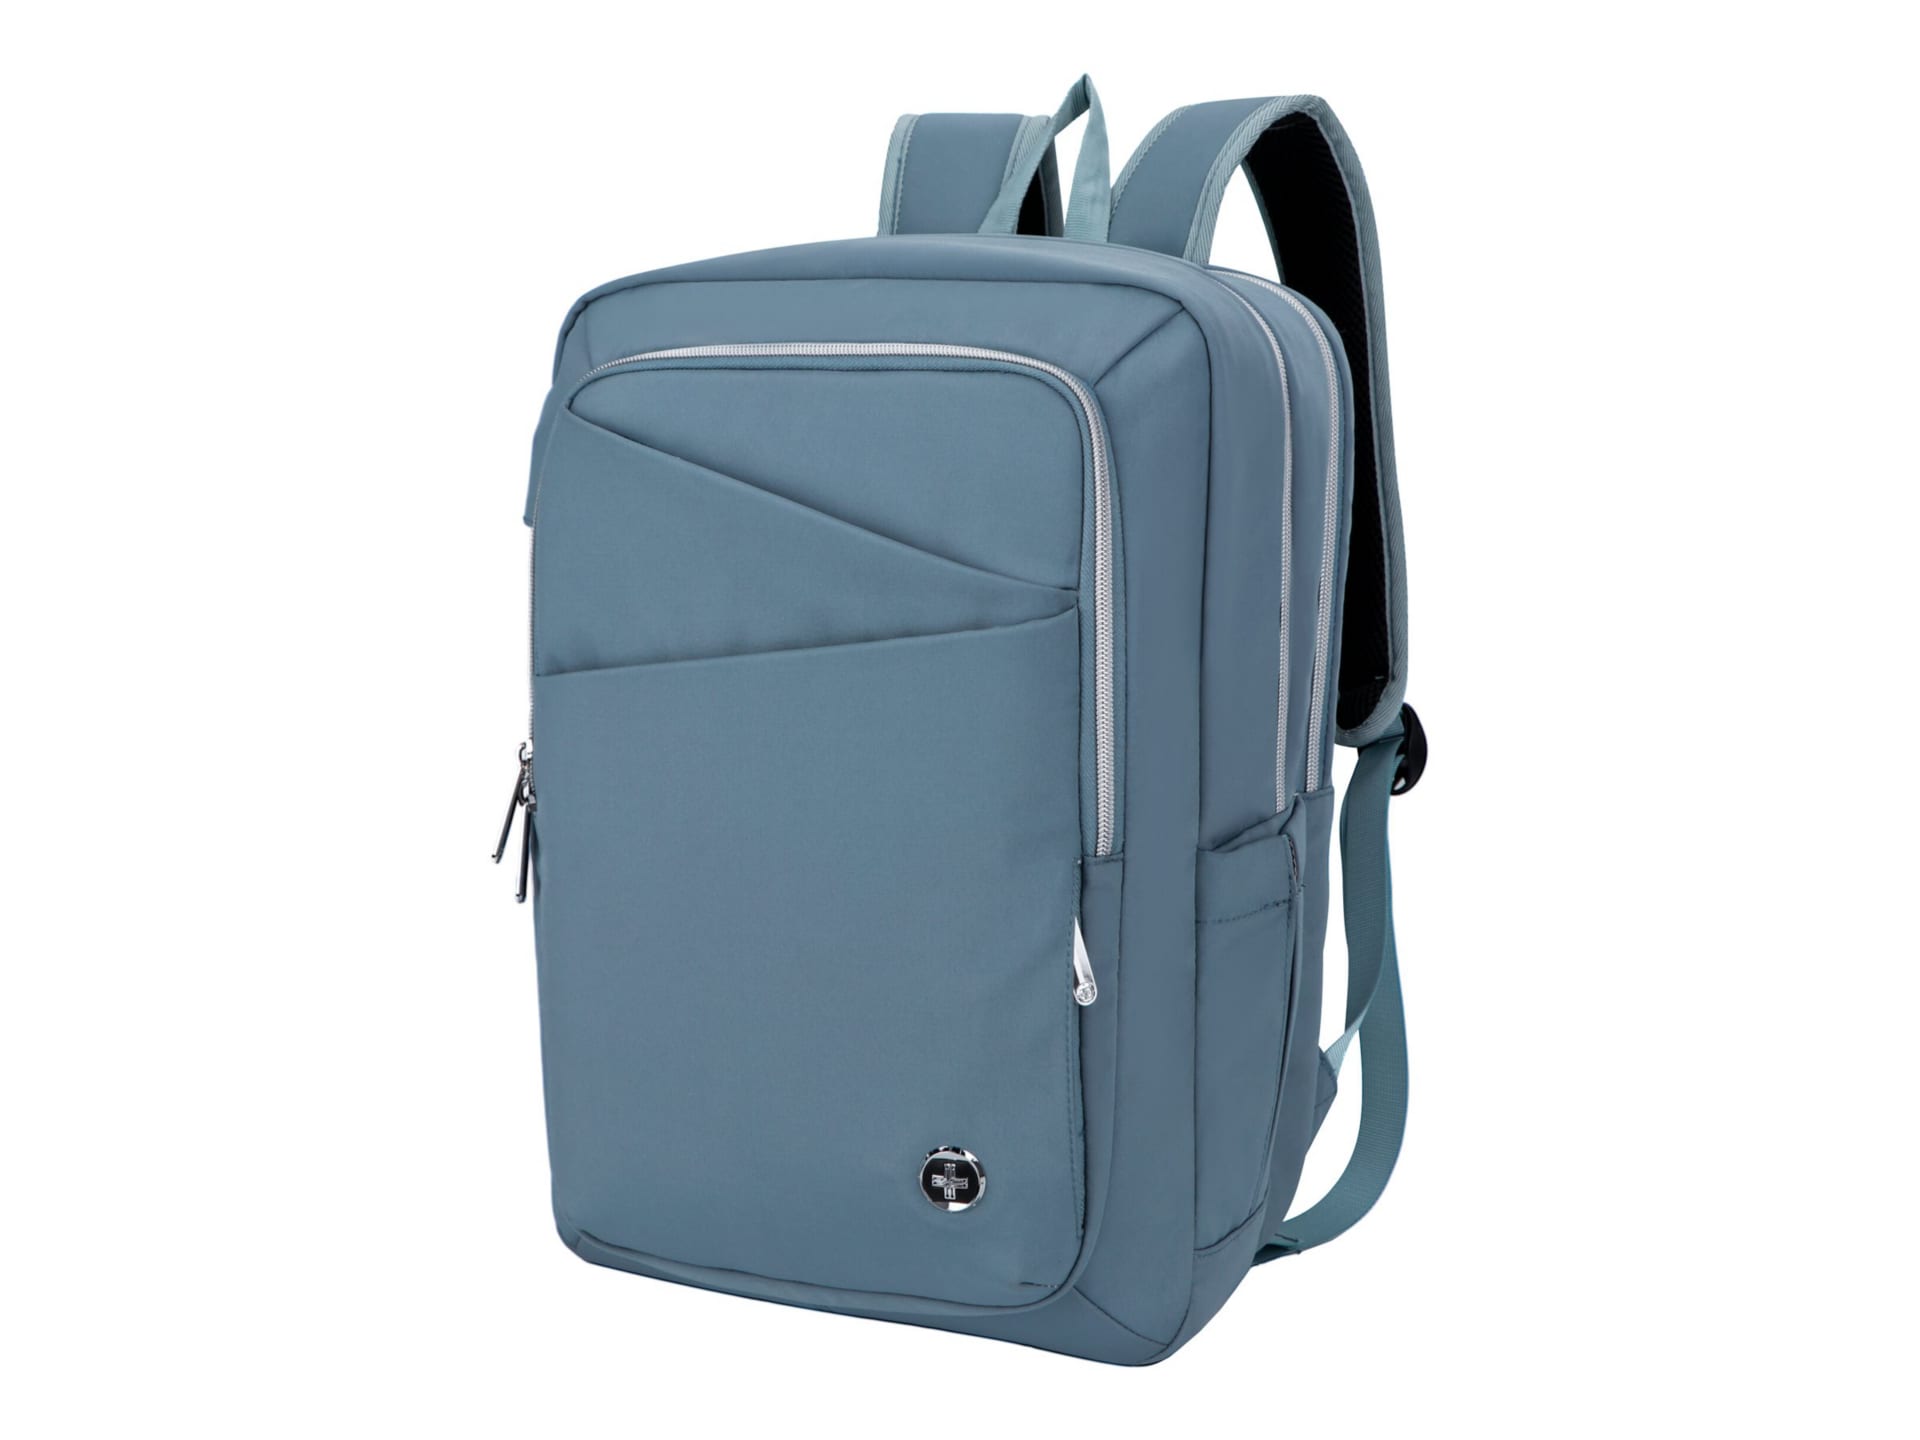 Swissdigital KATY ROSE F SD1006F-13 Carrying Case Backpack